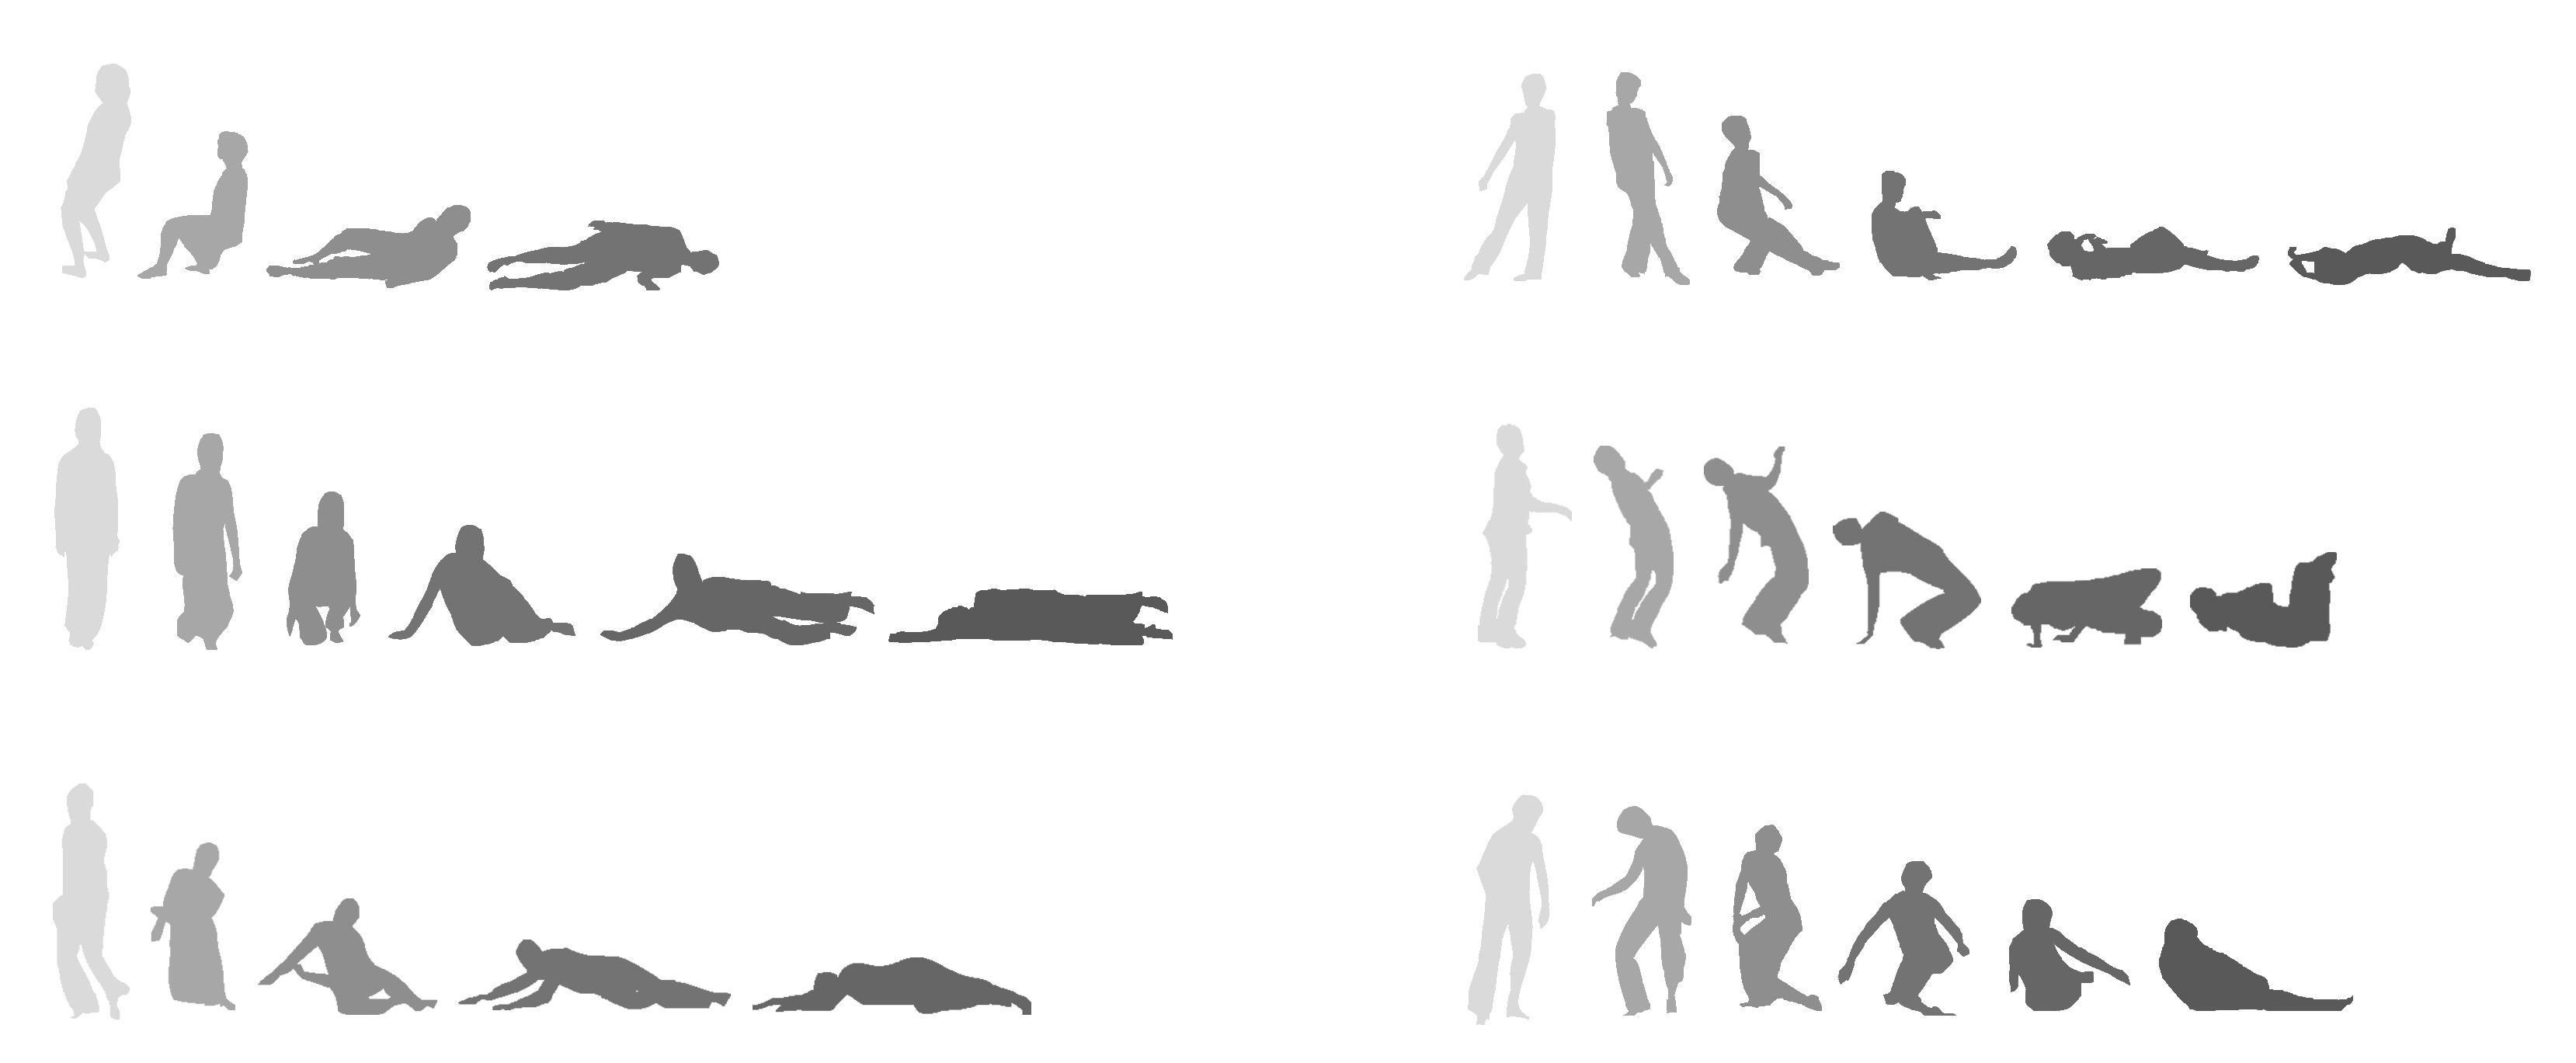 Figure 1: Visual silhouettes of falling strategies of dancers